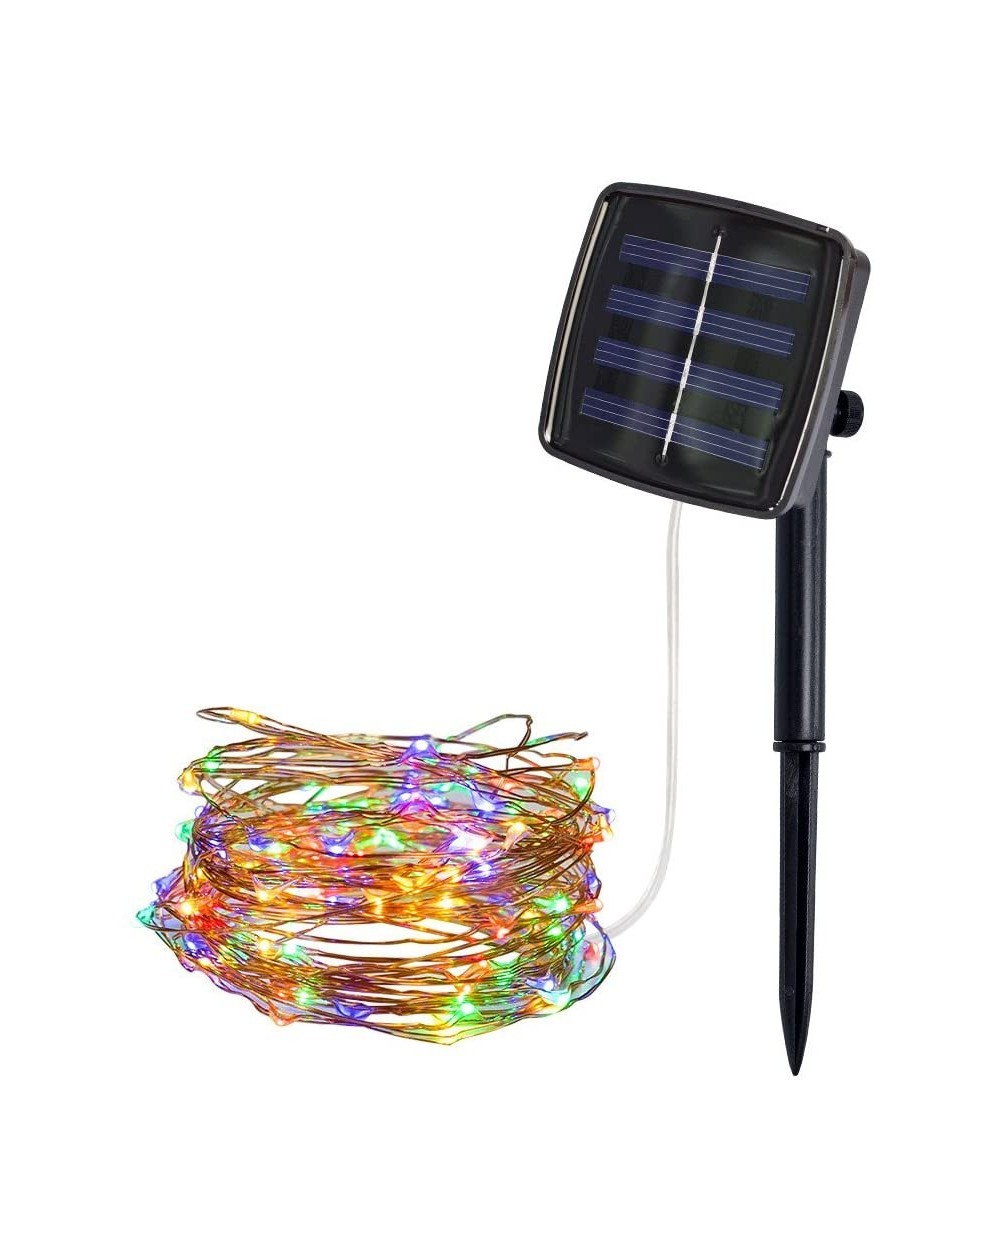 Outdoor String Lights Solar Fairy Lights- 2M Outdoor Solar Powered Copper Wire Light String 20 Lights Fairy Party Decor (Mult...